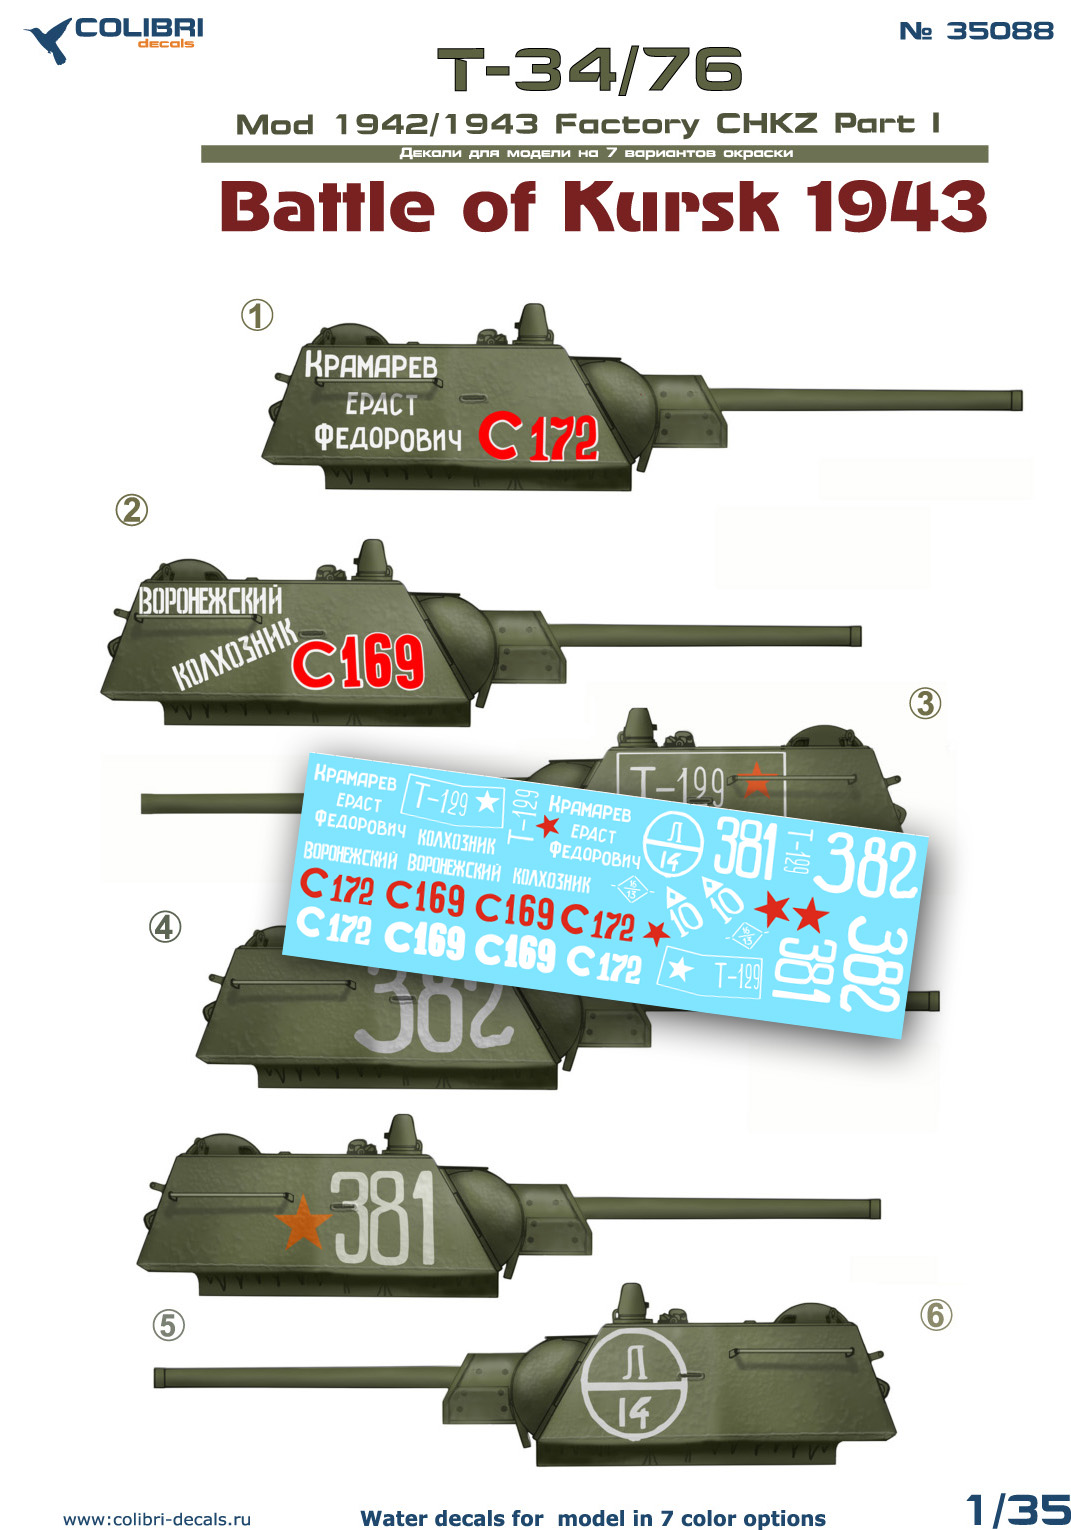 Декаль 1/35 Т-34/76 мod 1942/43 Factory CHKZ Part I Battle of Kursk 1943 (Colibri Decals)